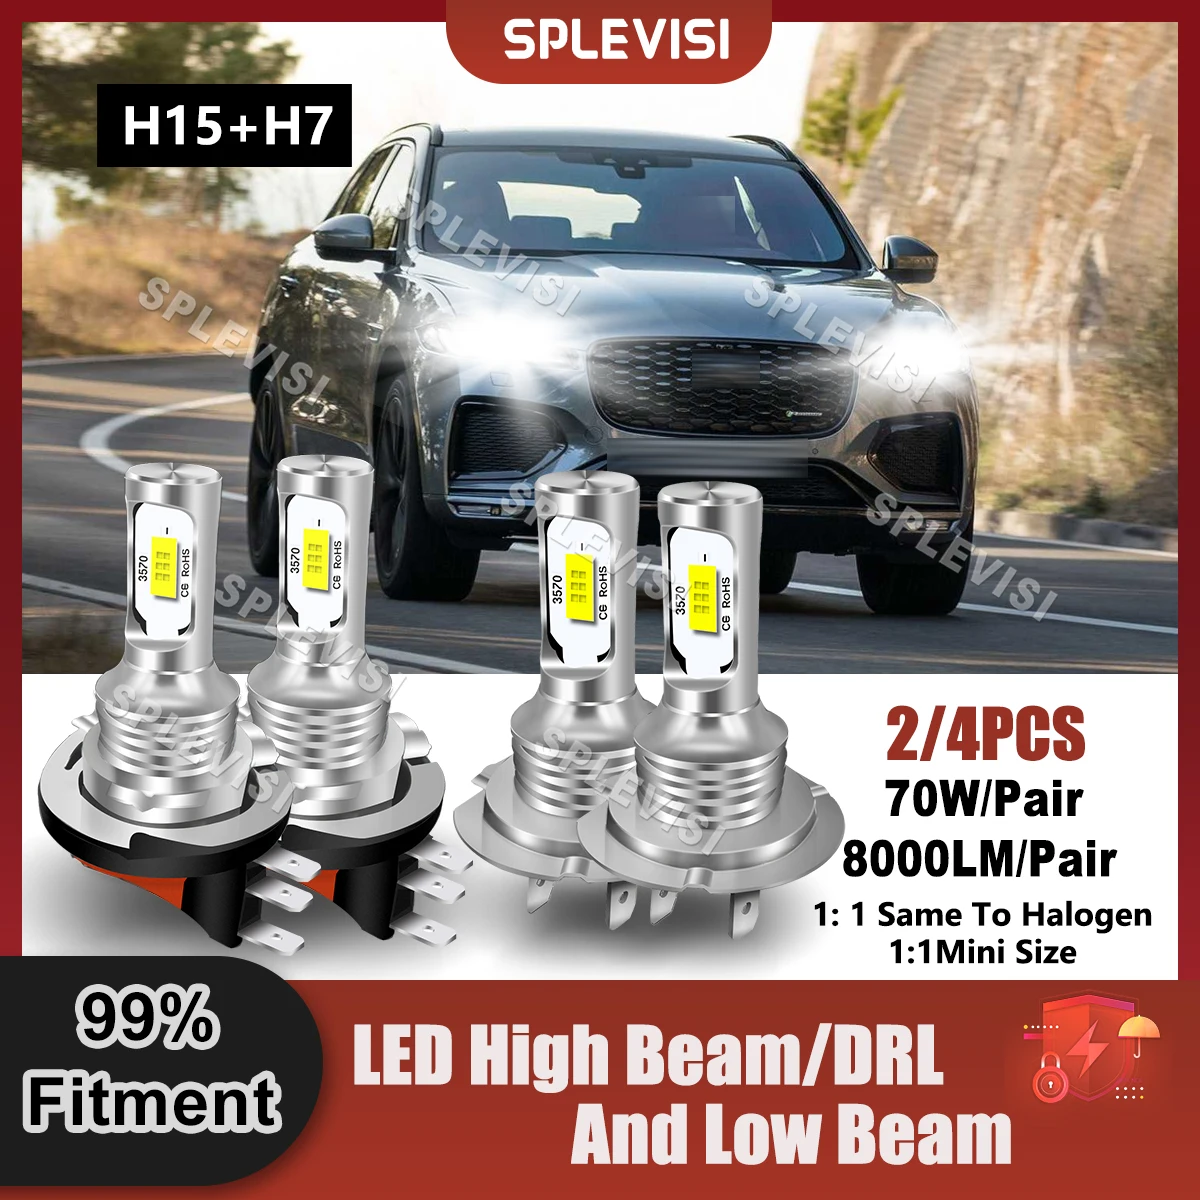 

4x Car LED H15 High Beam/Daytime Running Light+H7 Low Beam 8000LM/Pair For Jaguar F Pace X761 2017 2018 2019 2020 2021 2022 2023